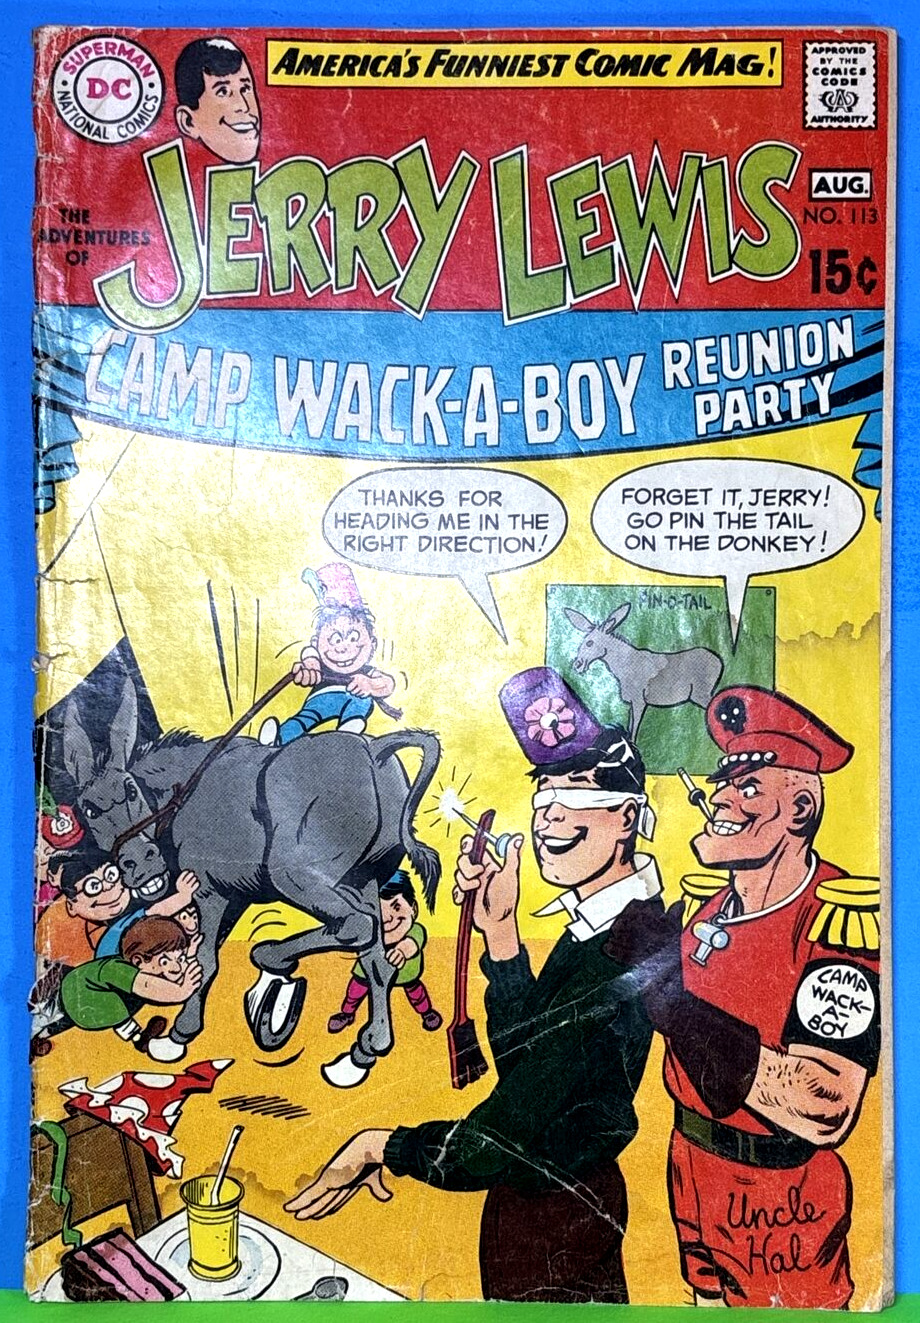 1969 “Adventures of Jerry Lewis” DC National Comics No. 113 Camp Wack-A-Boy.